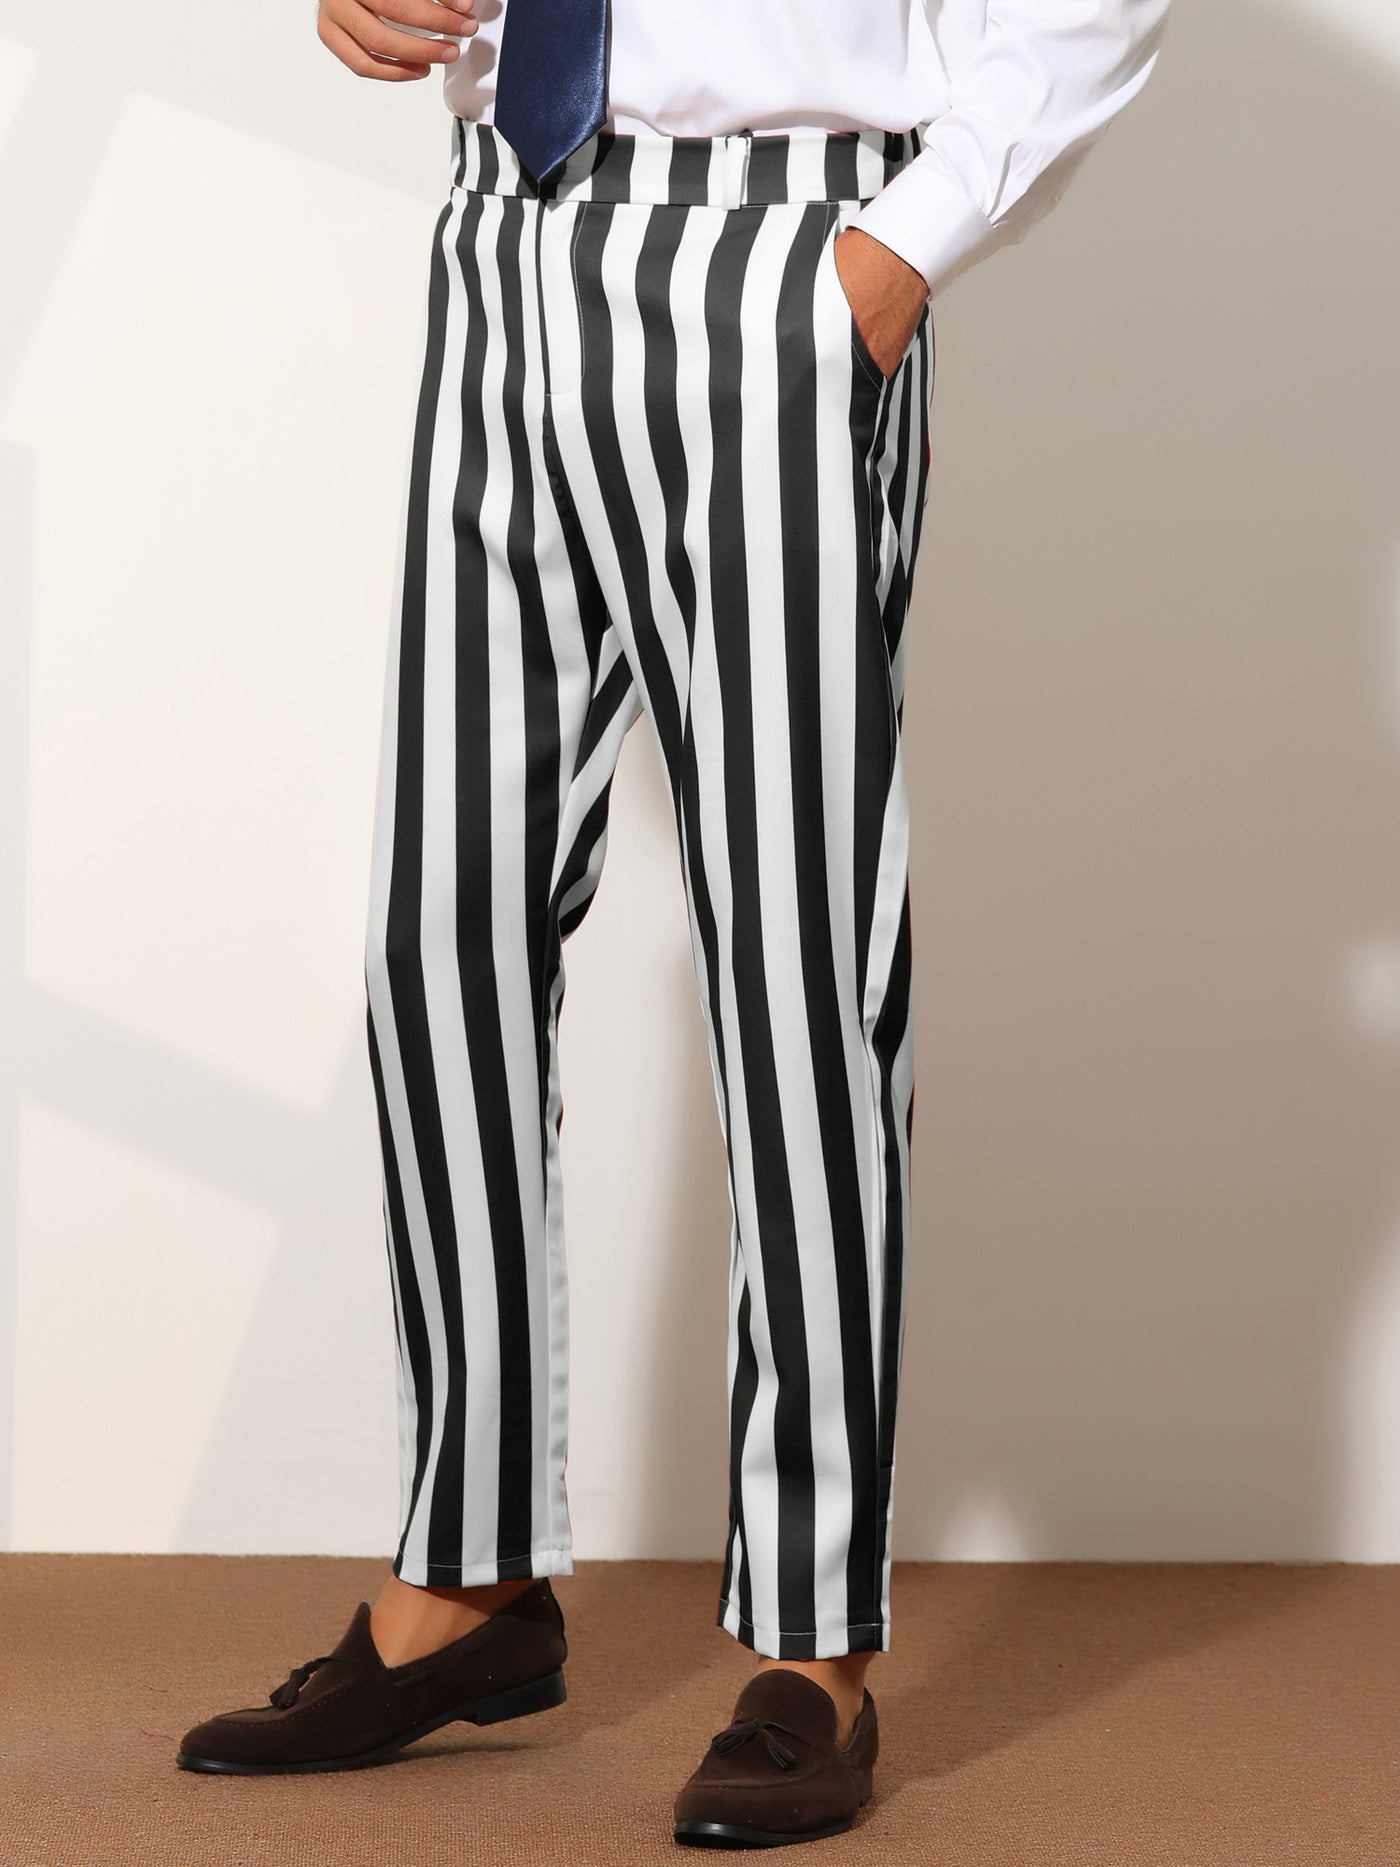 New Men's Vertical Stripe Slacks Striped Business Party Casual